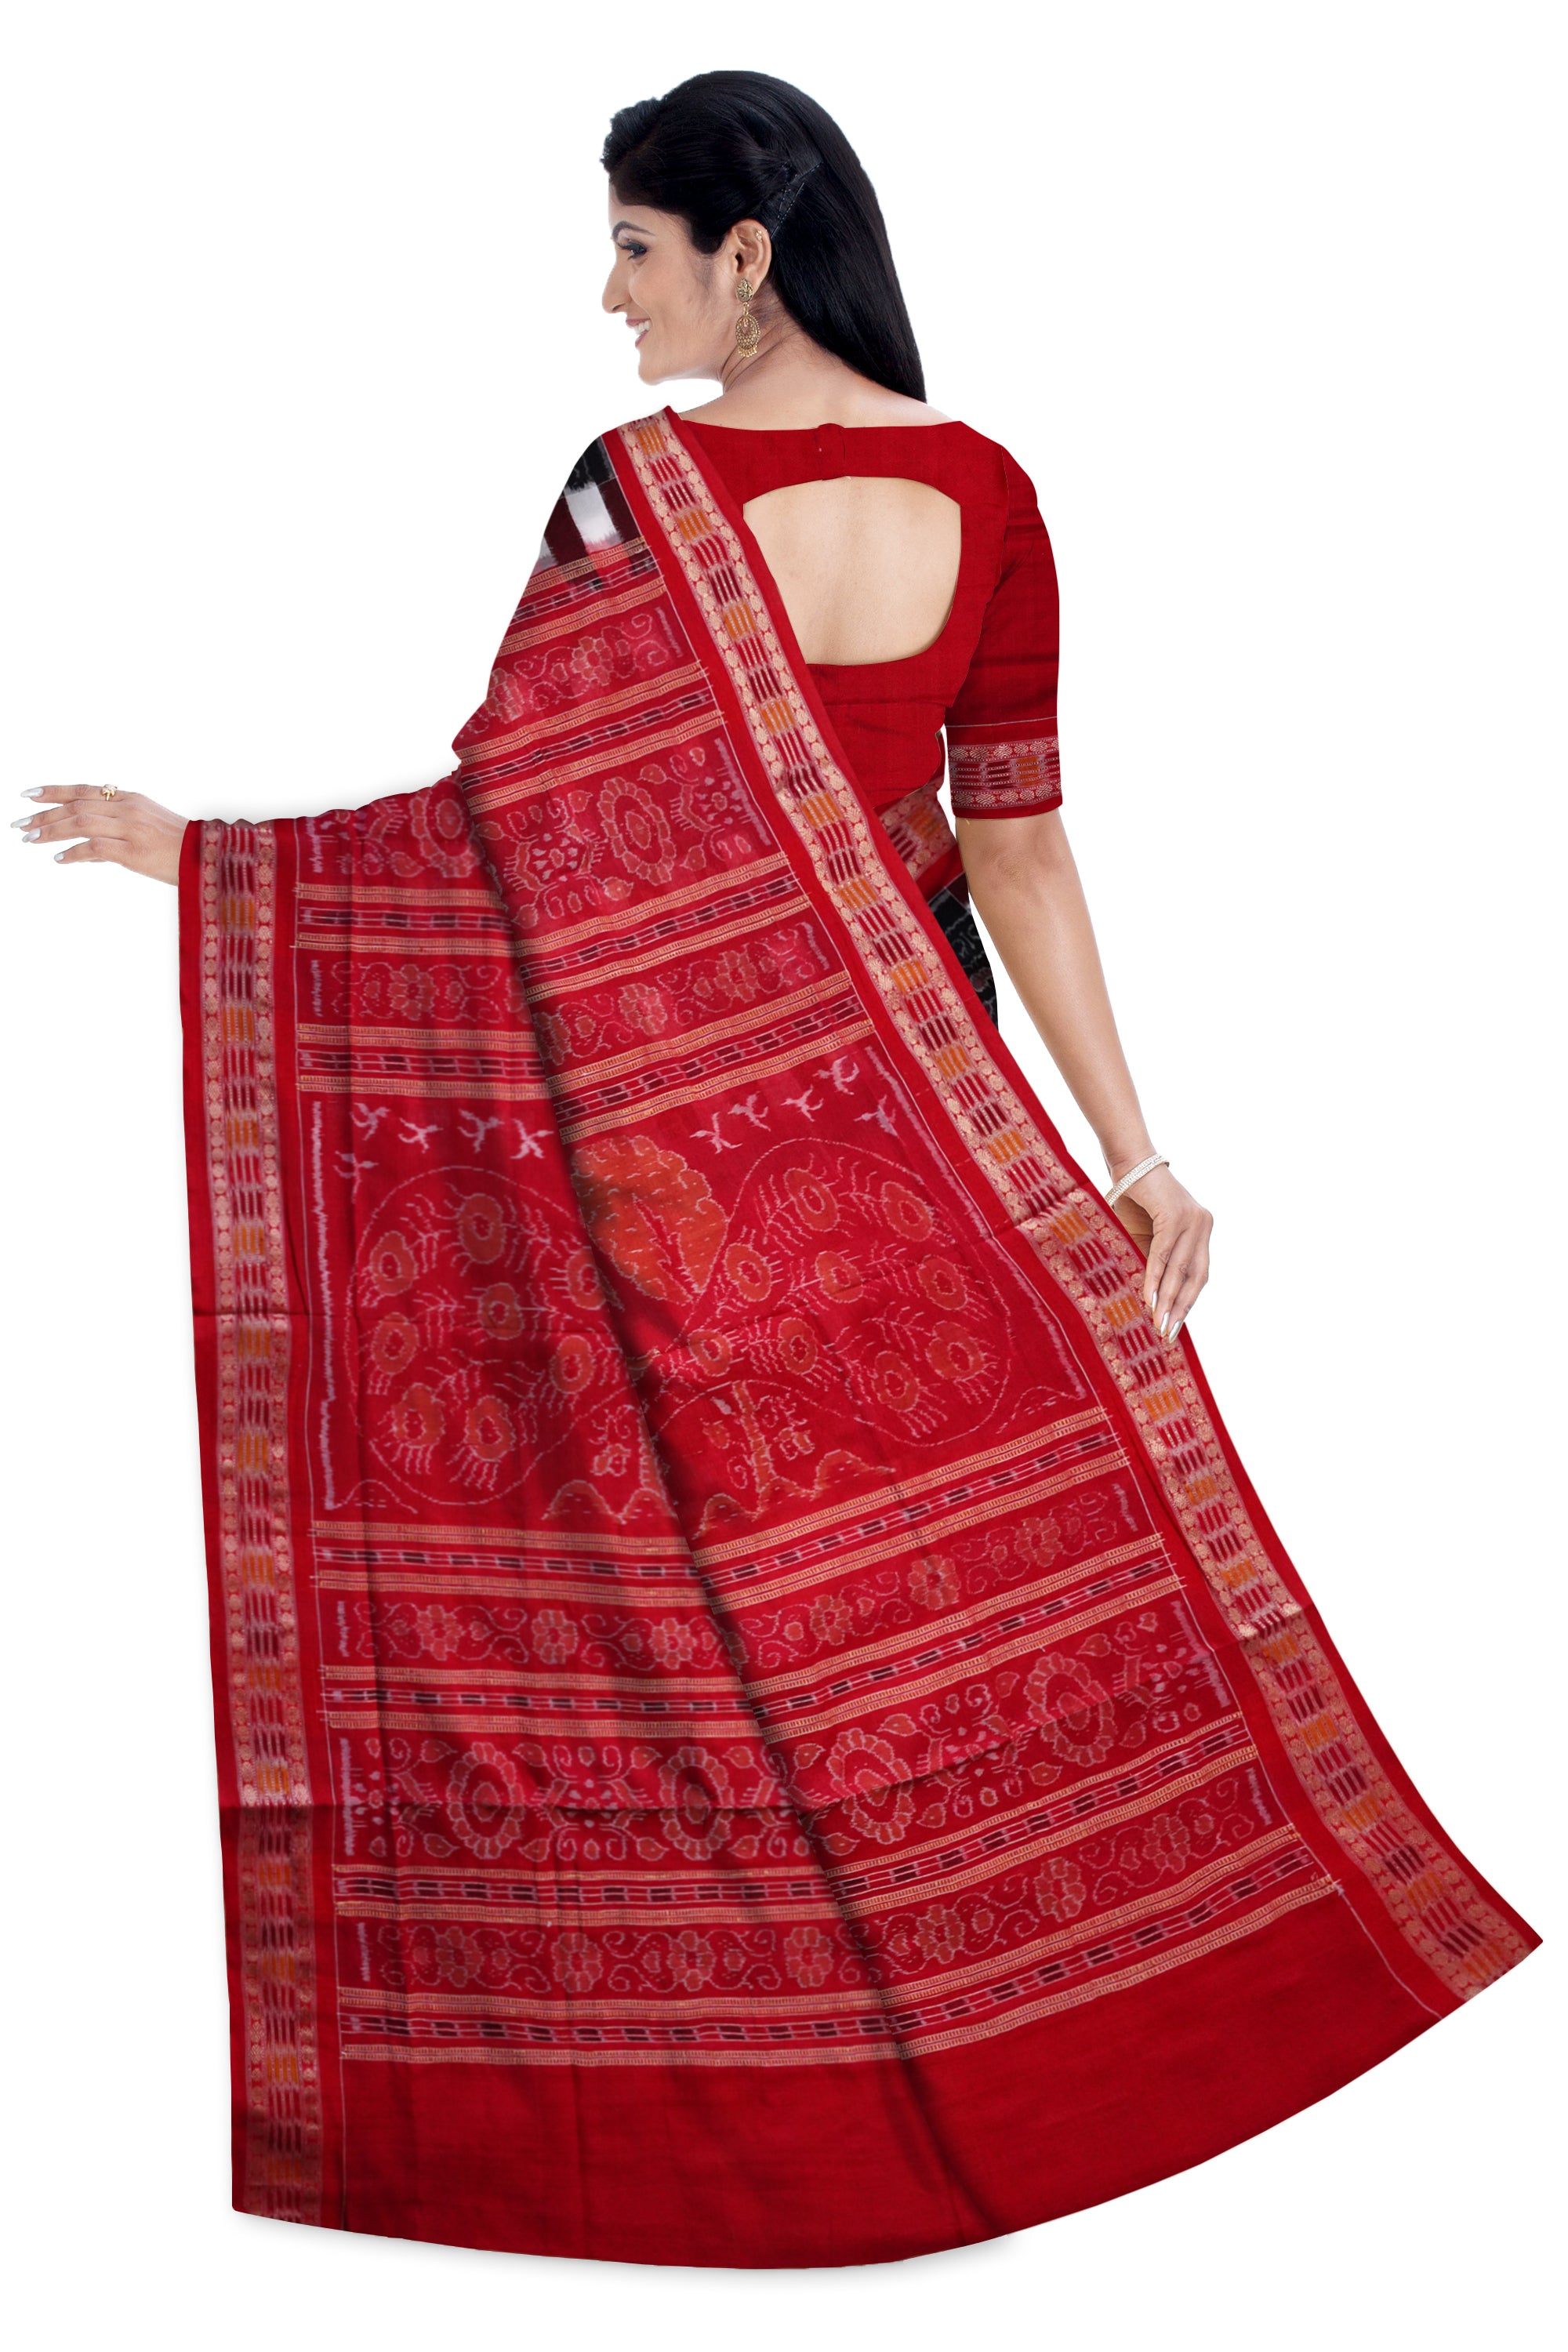 Black, Red color with white and Coffee color Sambalpuri cotton saree  in box pattern. - Koshali Arts & Crafts Enterprise